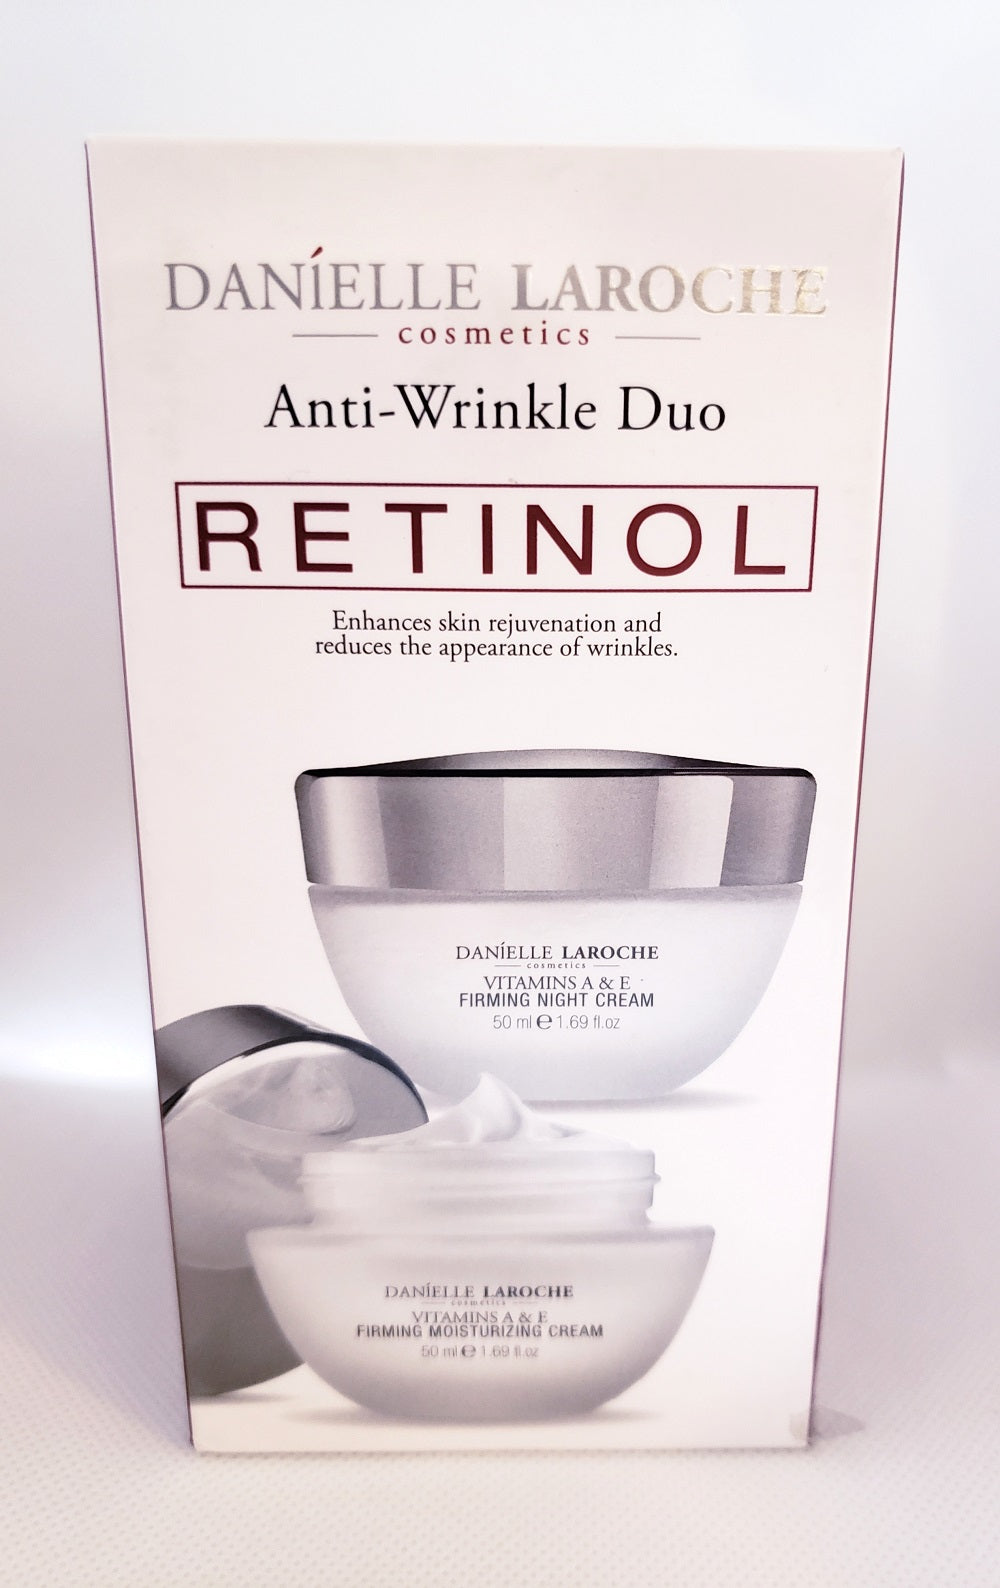 Danielle Laroche Anti-Wrinkle Duo Retinol